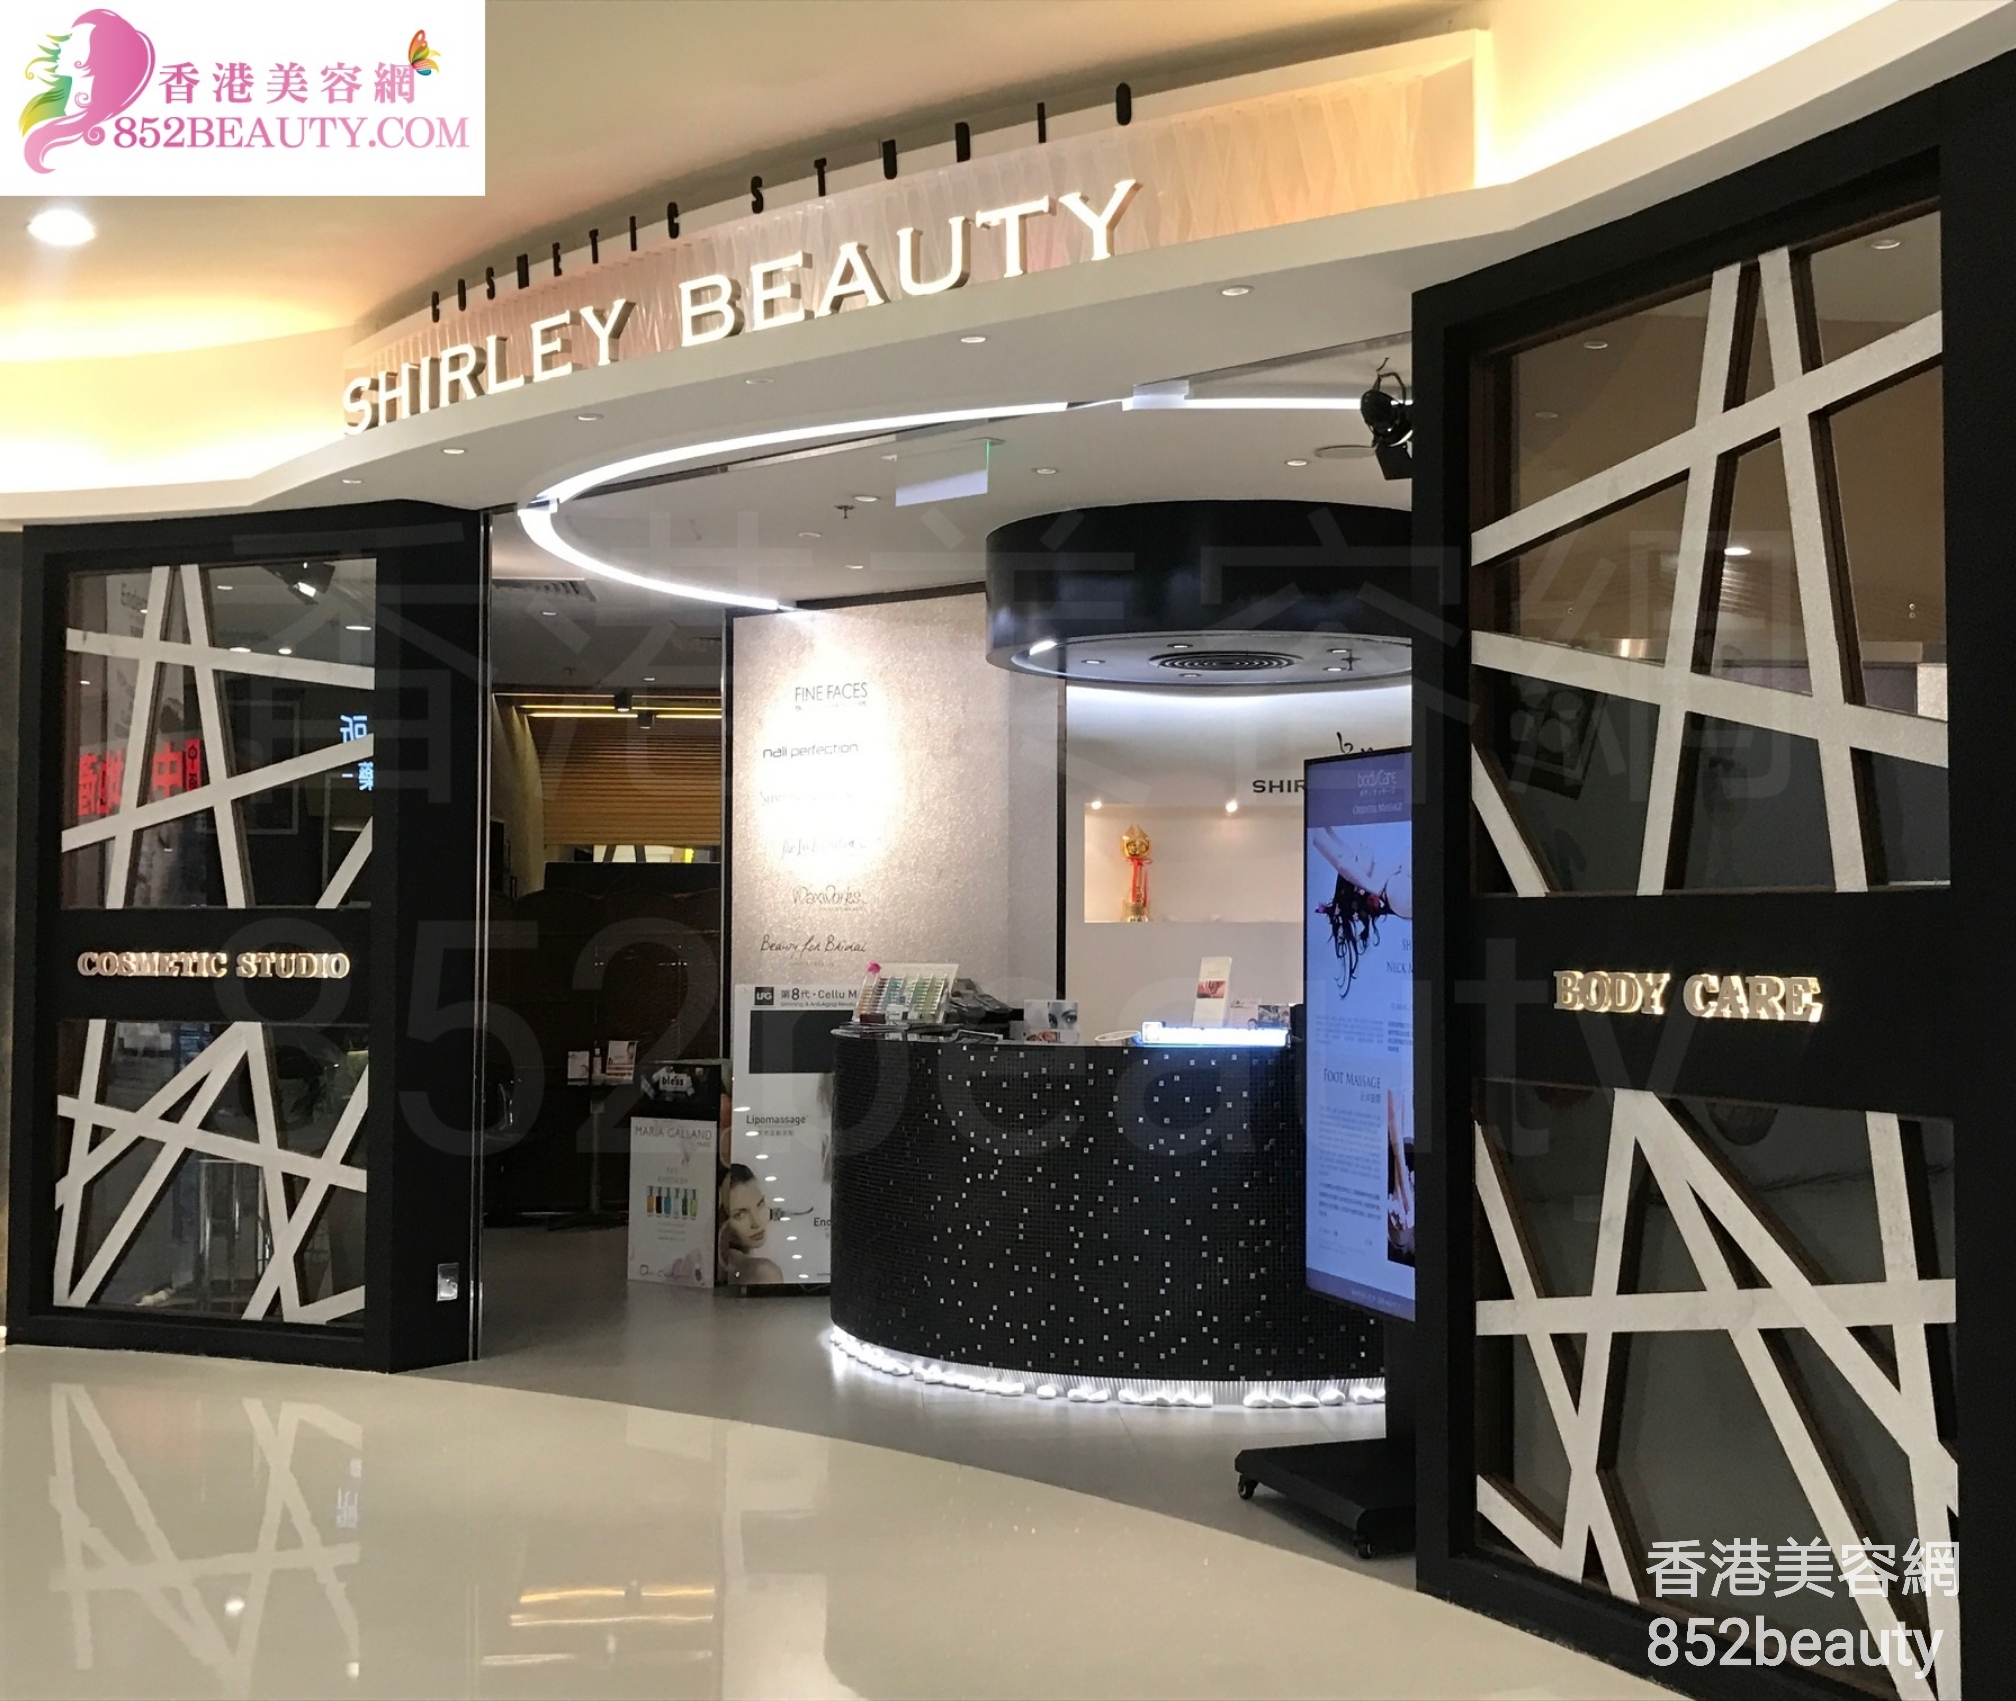 香港美容網 Hong Kong Beauty Salon 美容院 / 美容師: SHIRLEY BEAUTY